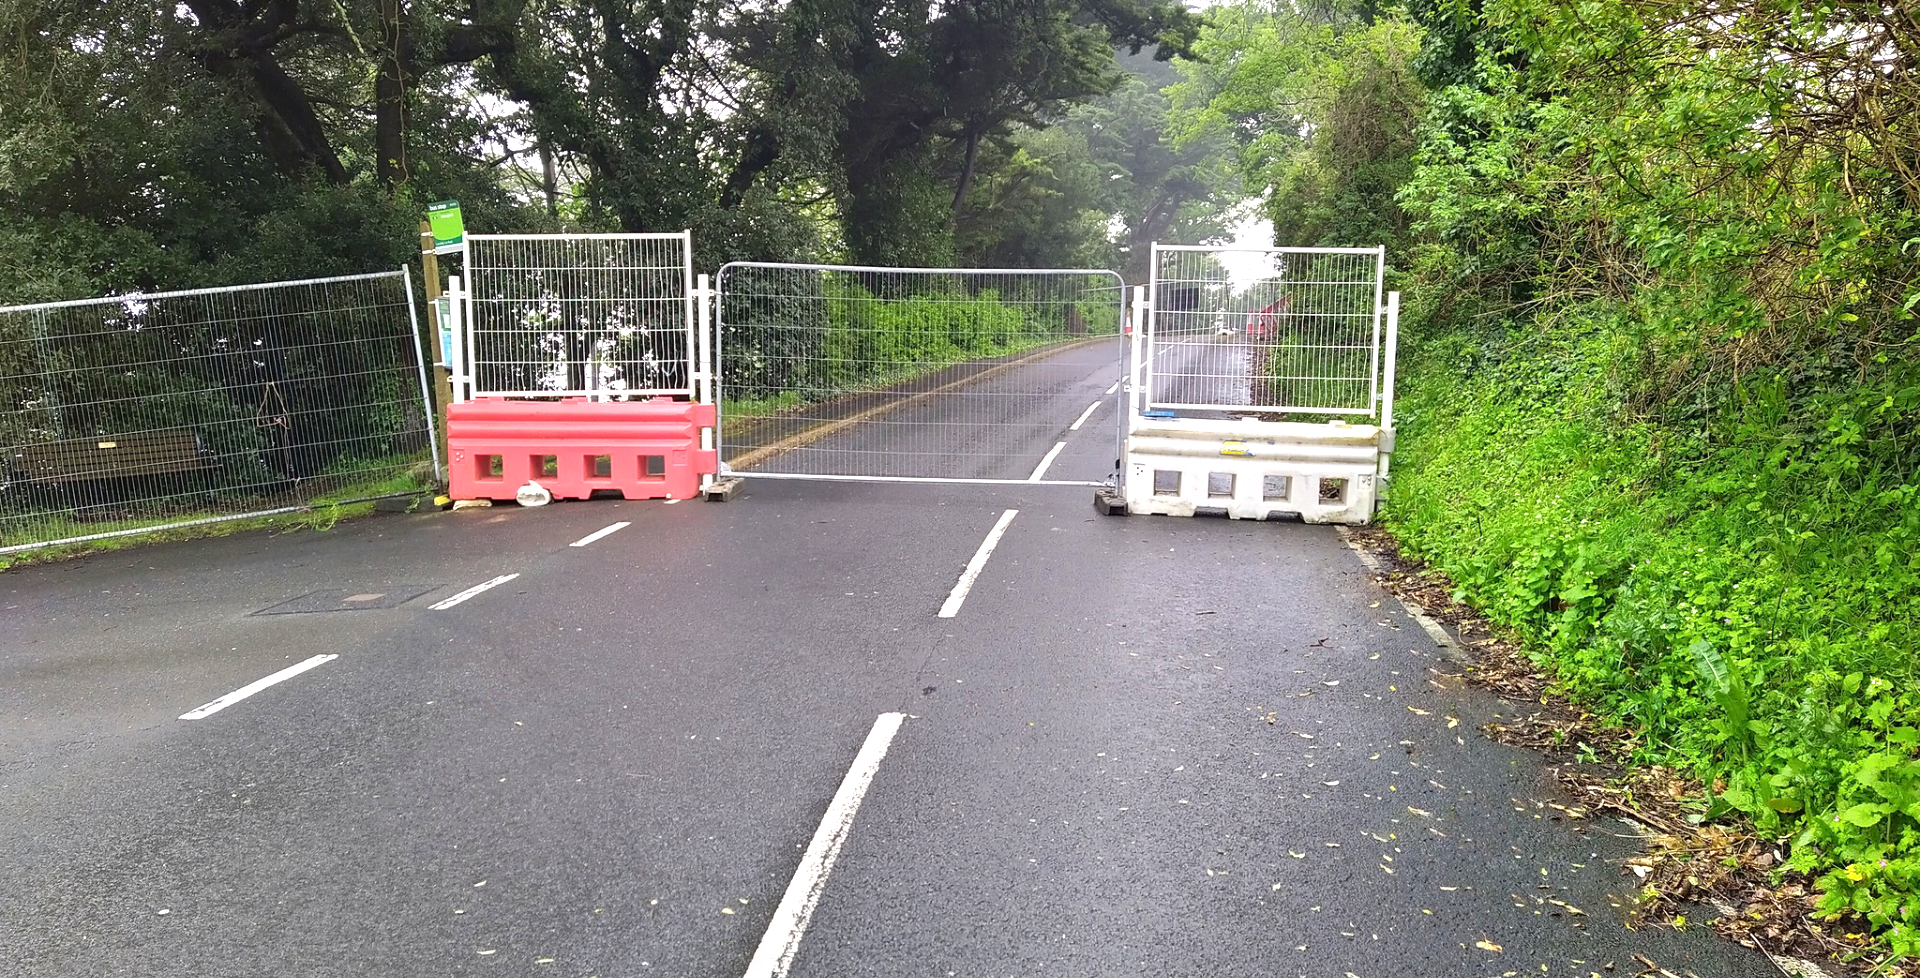 New road closure at leeson road - Adrian Wheeler